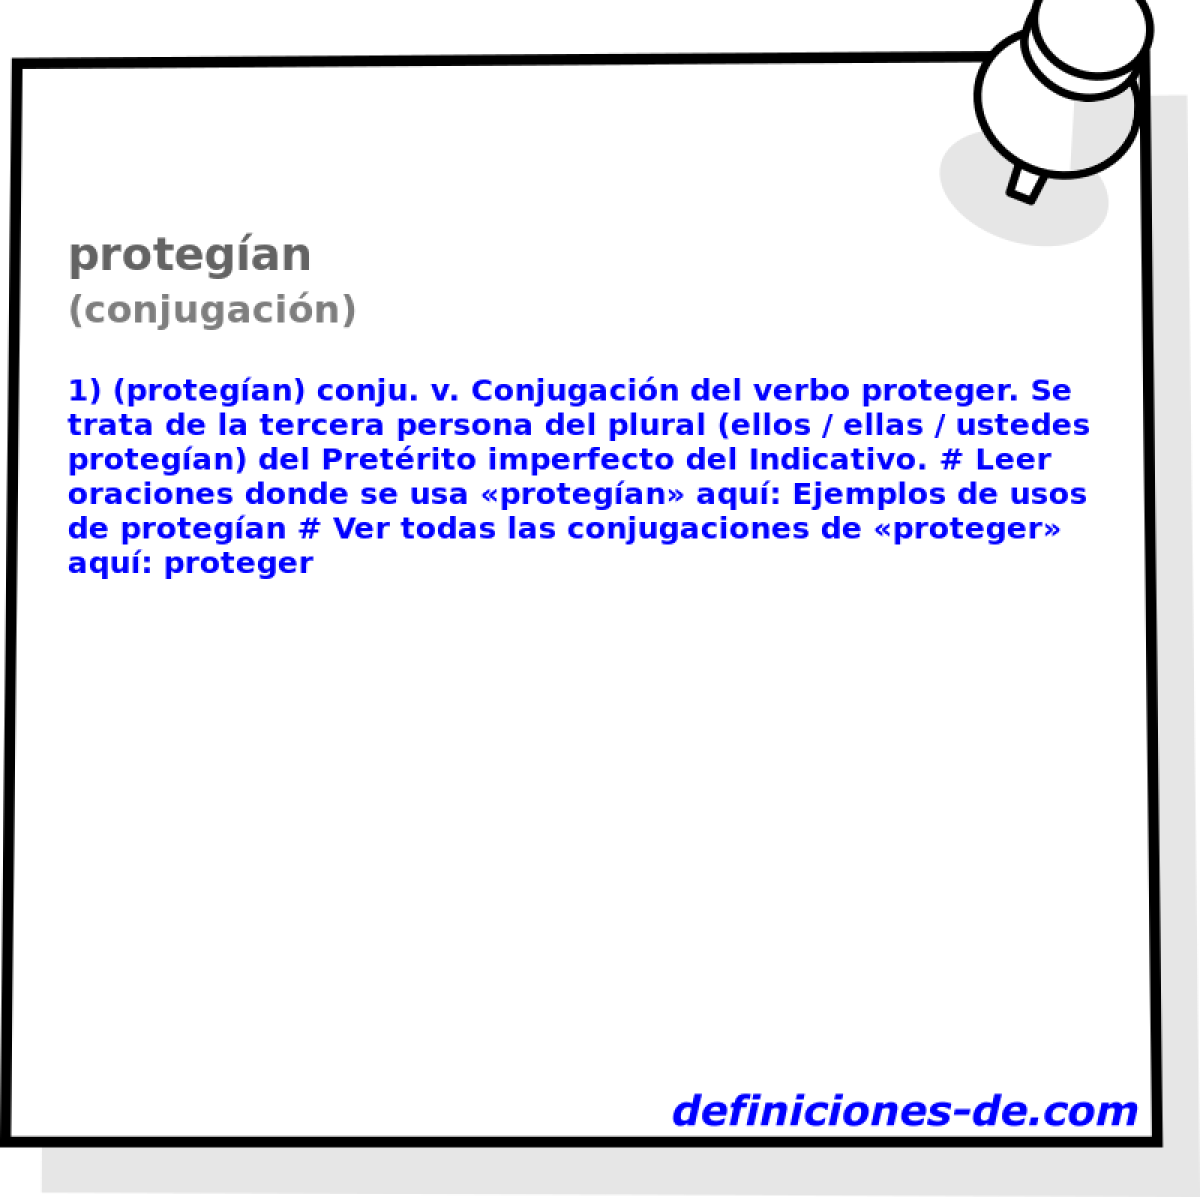 protegan (conjugacin)